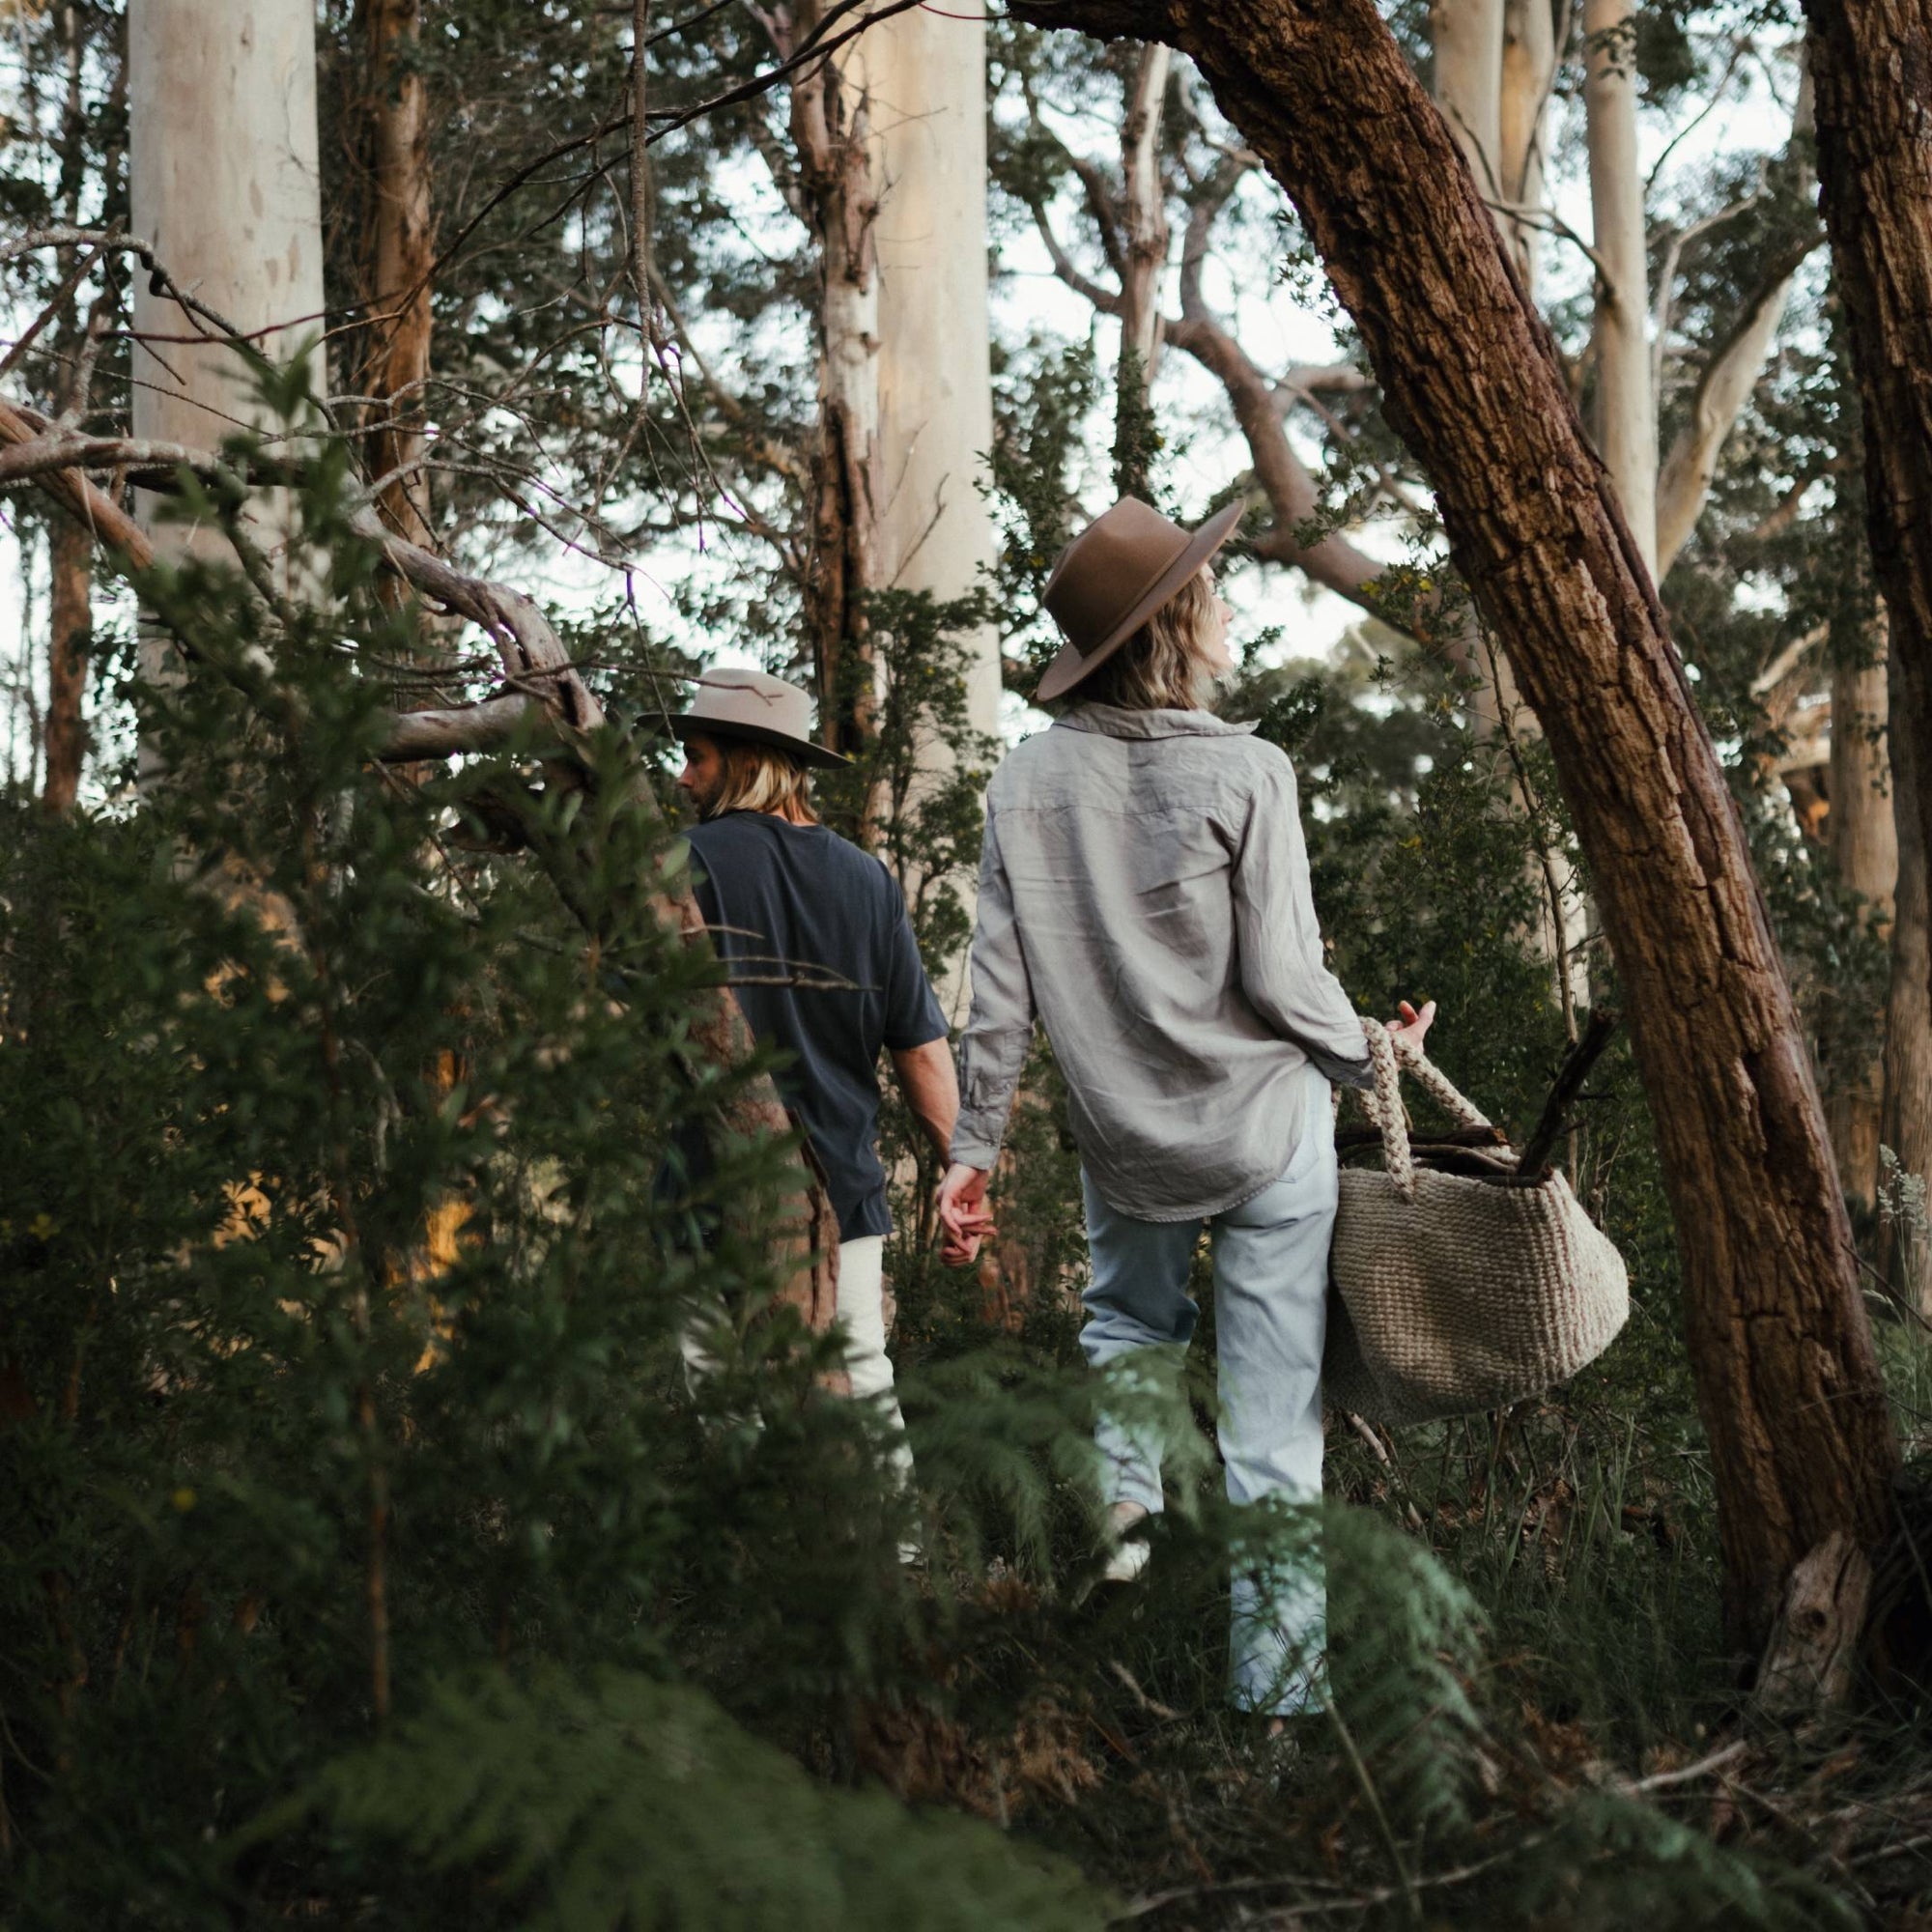 Rachel and her partner walk through bushland collecting kindling